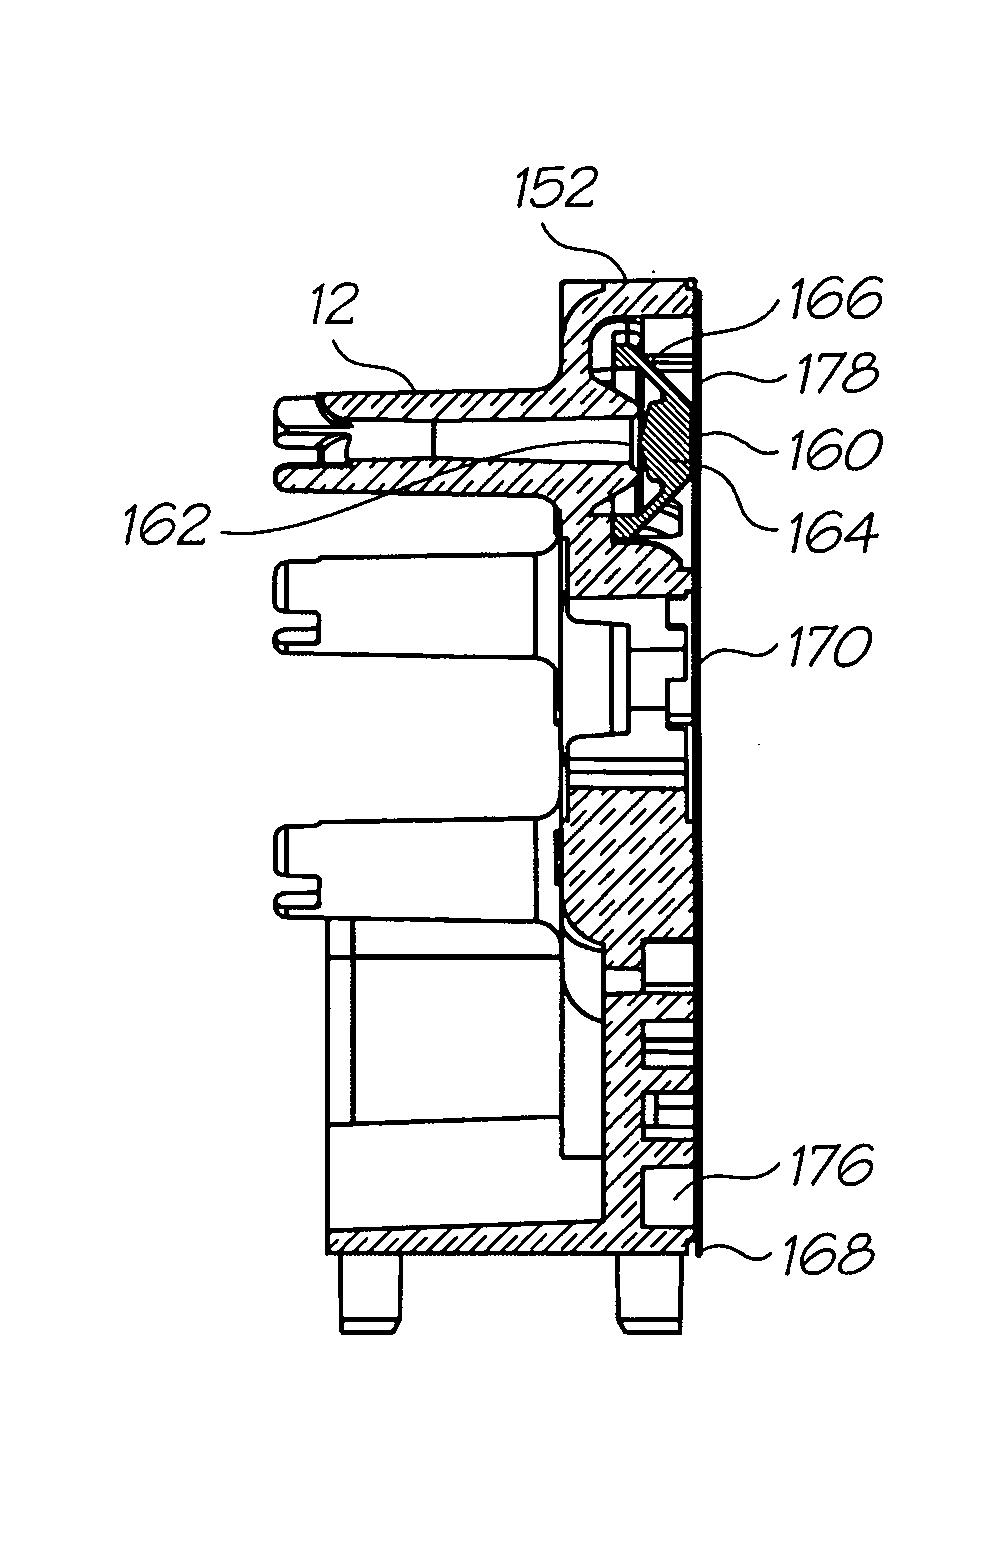 Ink manifold with multiple conduit shut off valve